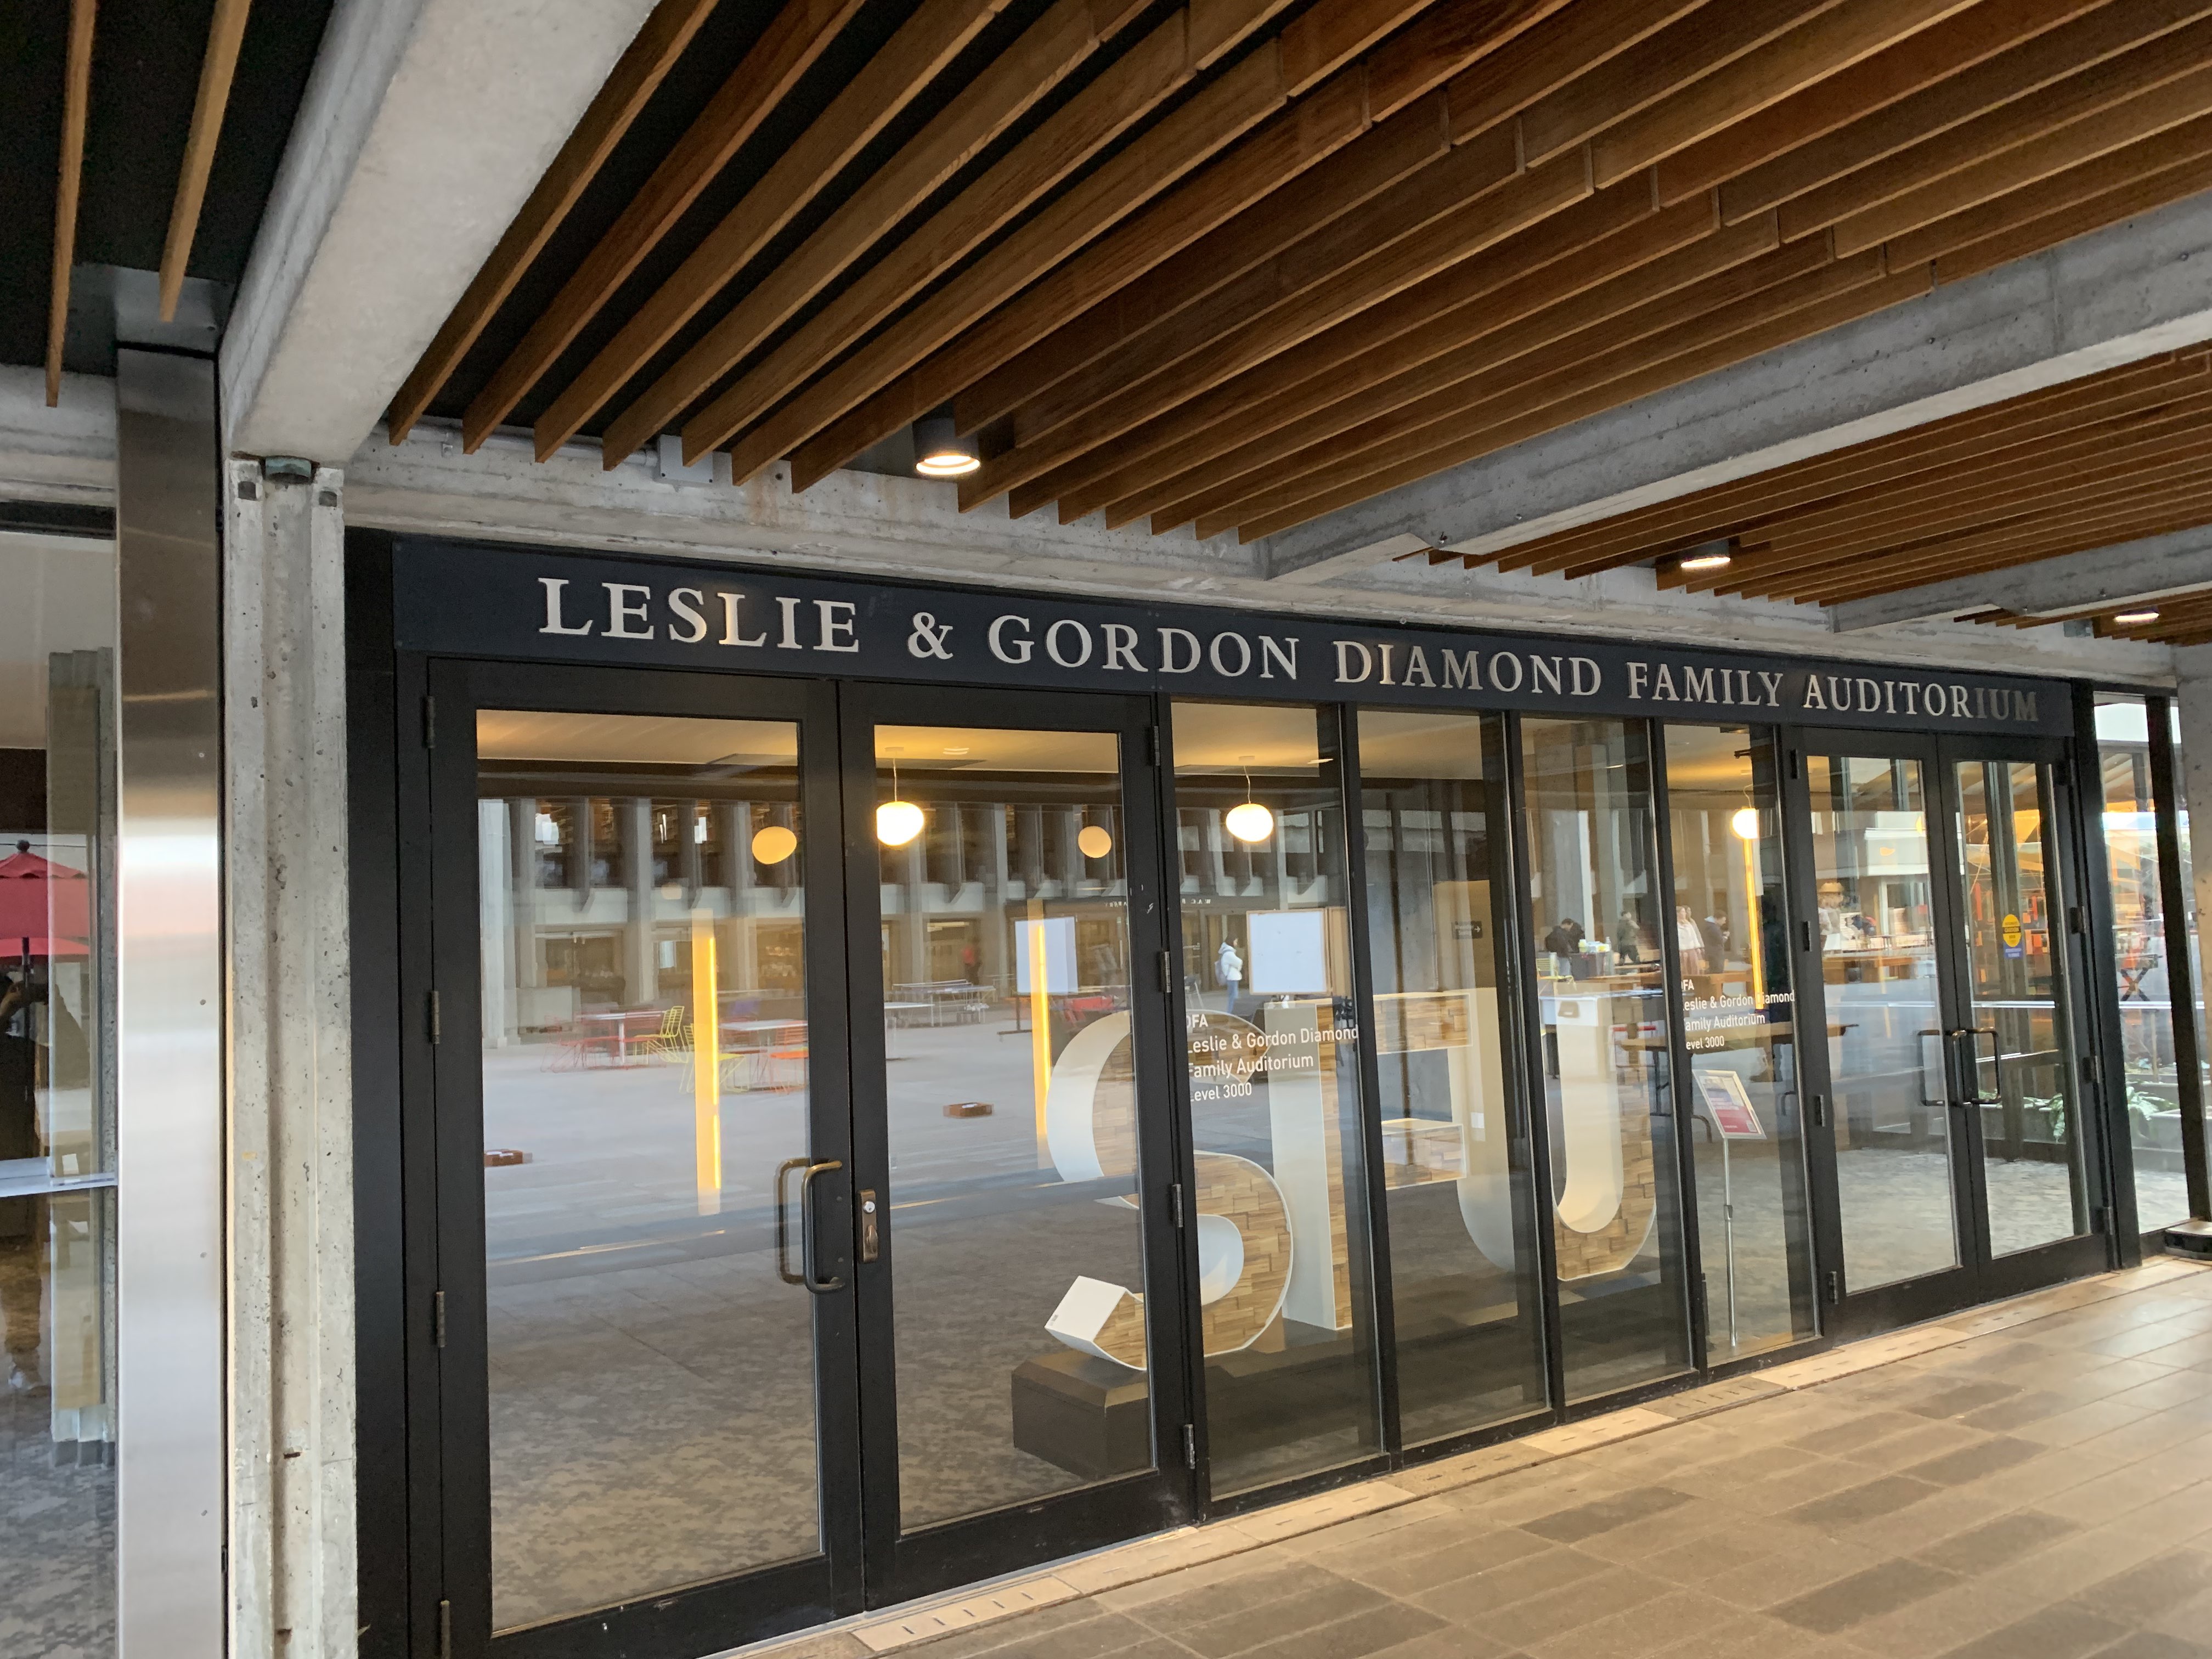 Leslie and Gordon Diamond Family Auditorium